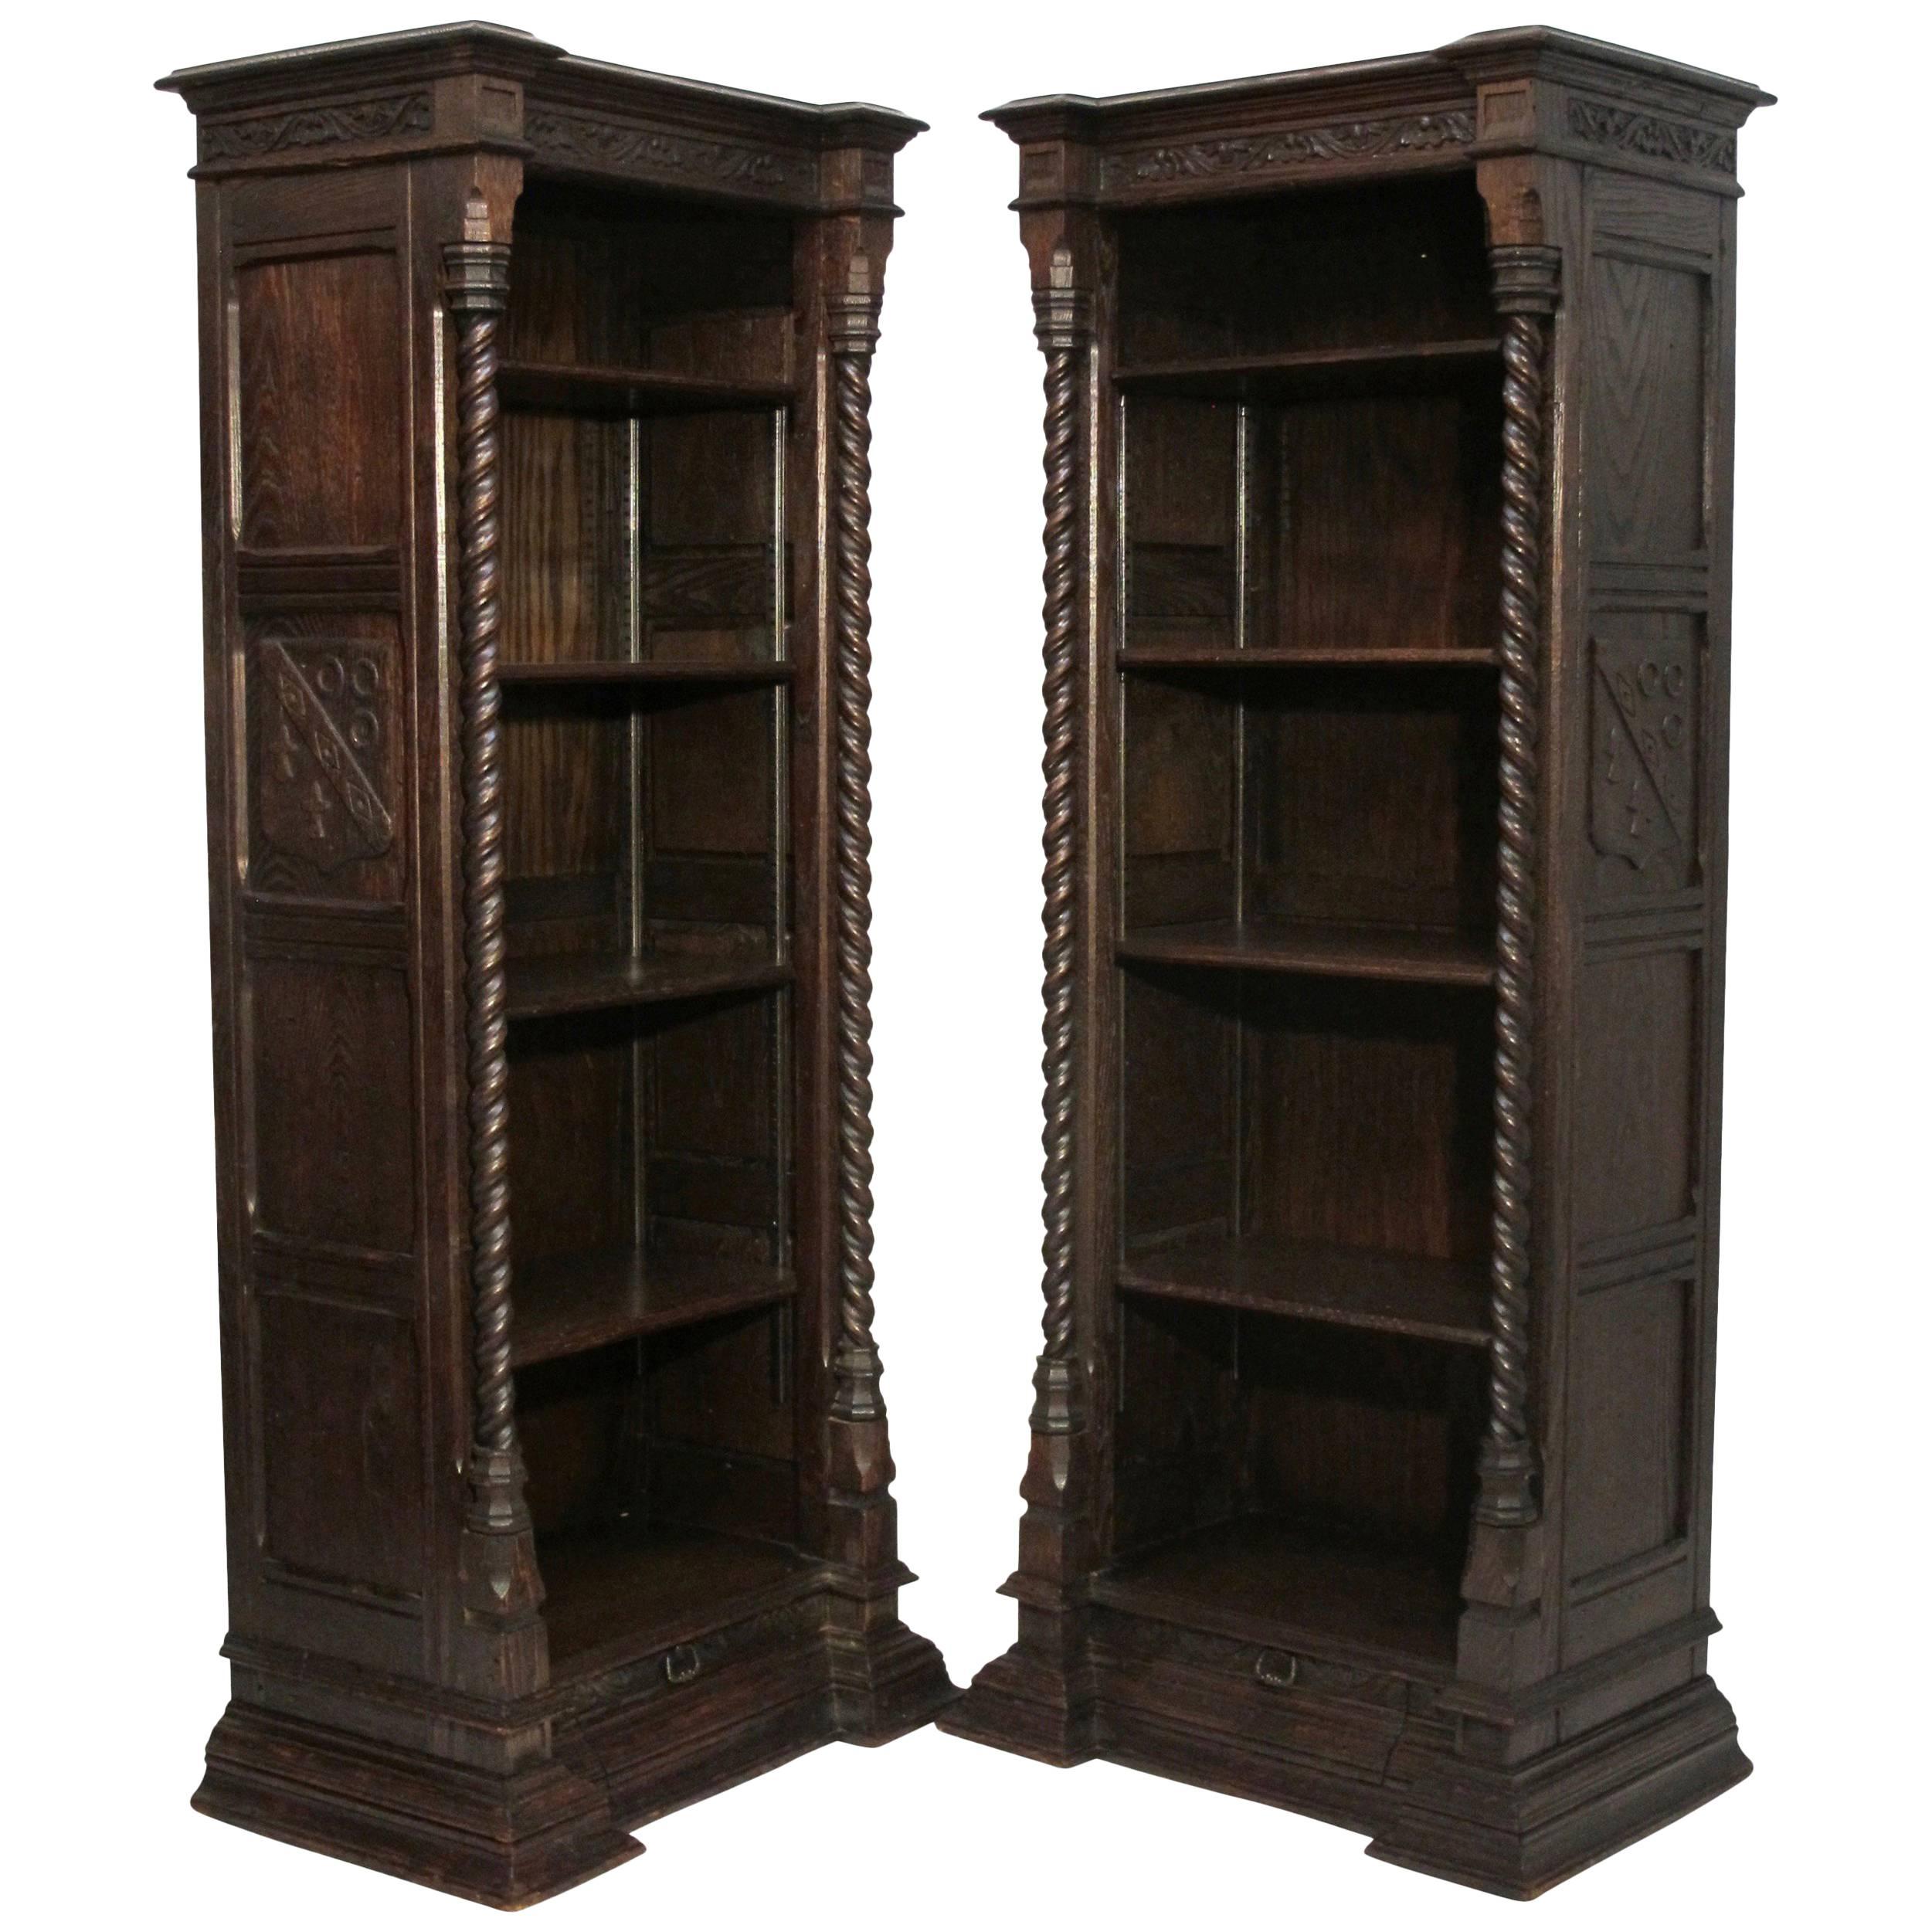 Pair of Spanish Revival Oak Bookcases, American, circa 1920